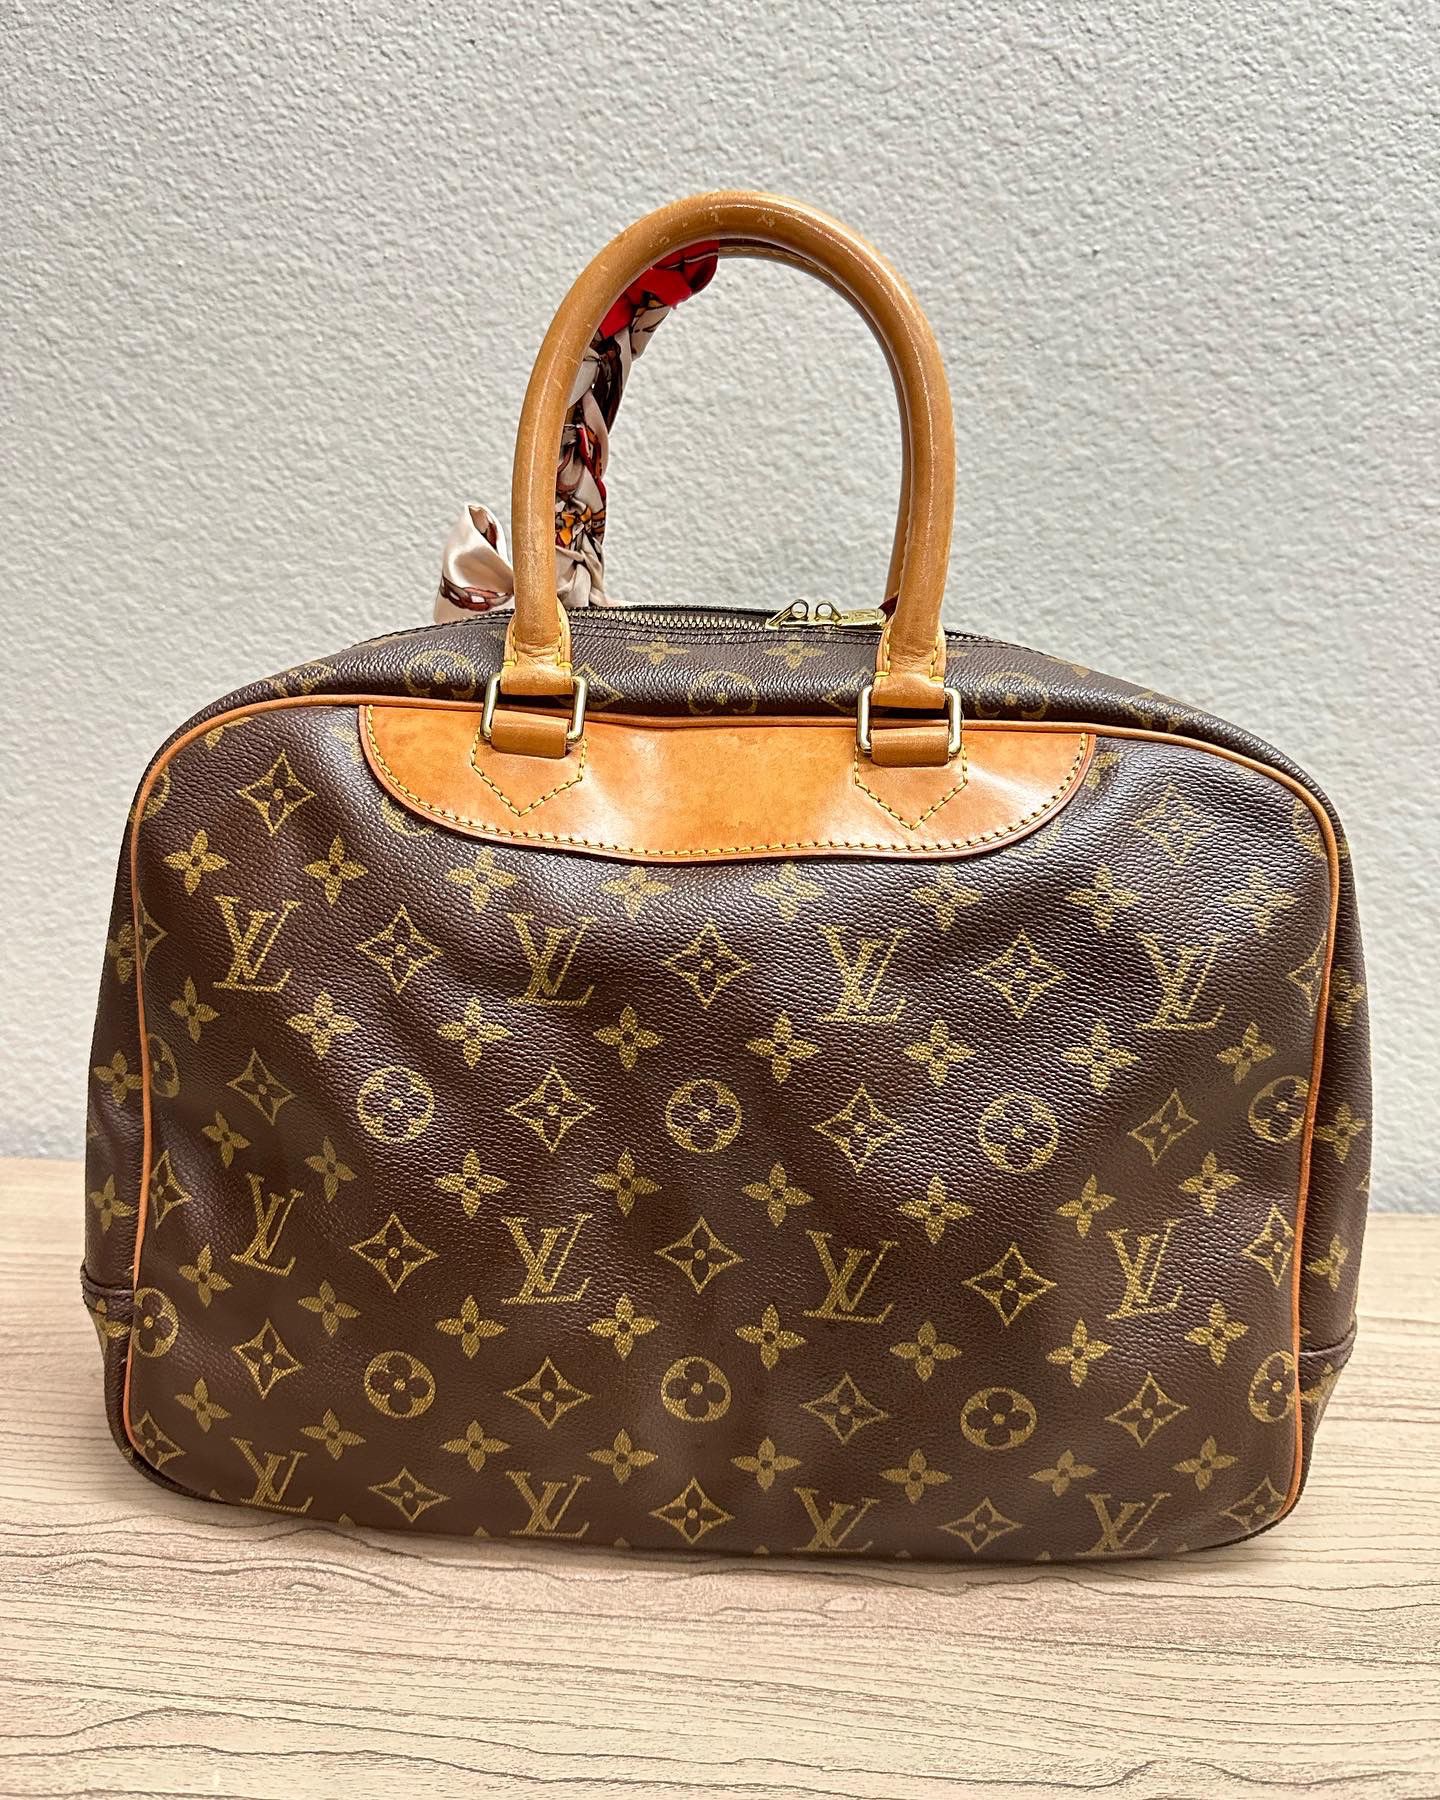 Louis Vuitton Deauville Monogram Handbag for Sale in Houston, TX - OfferUp